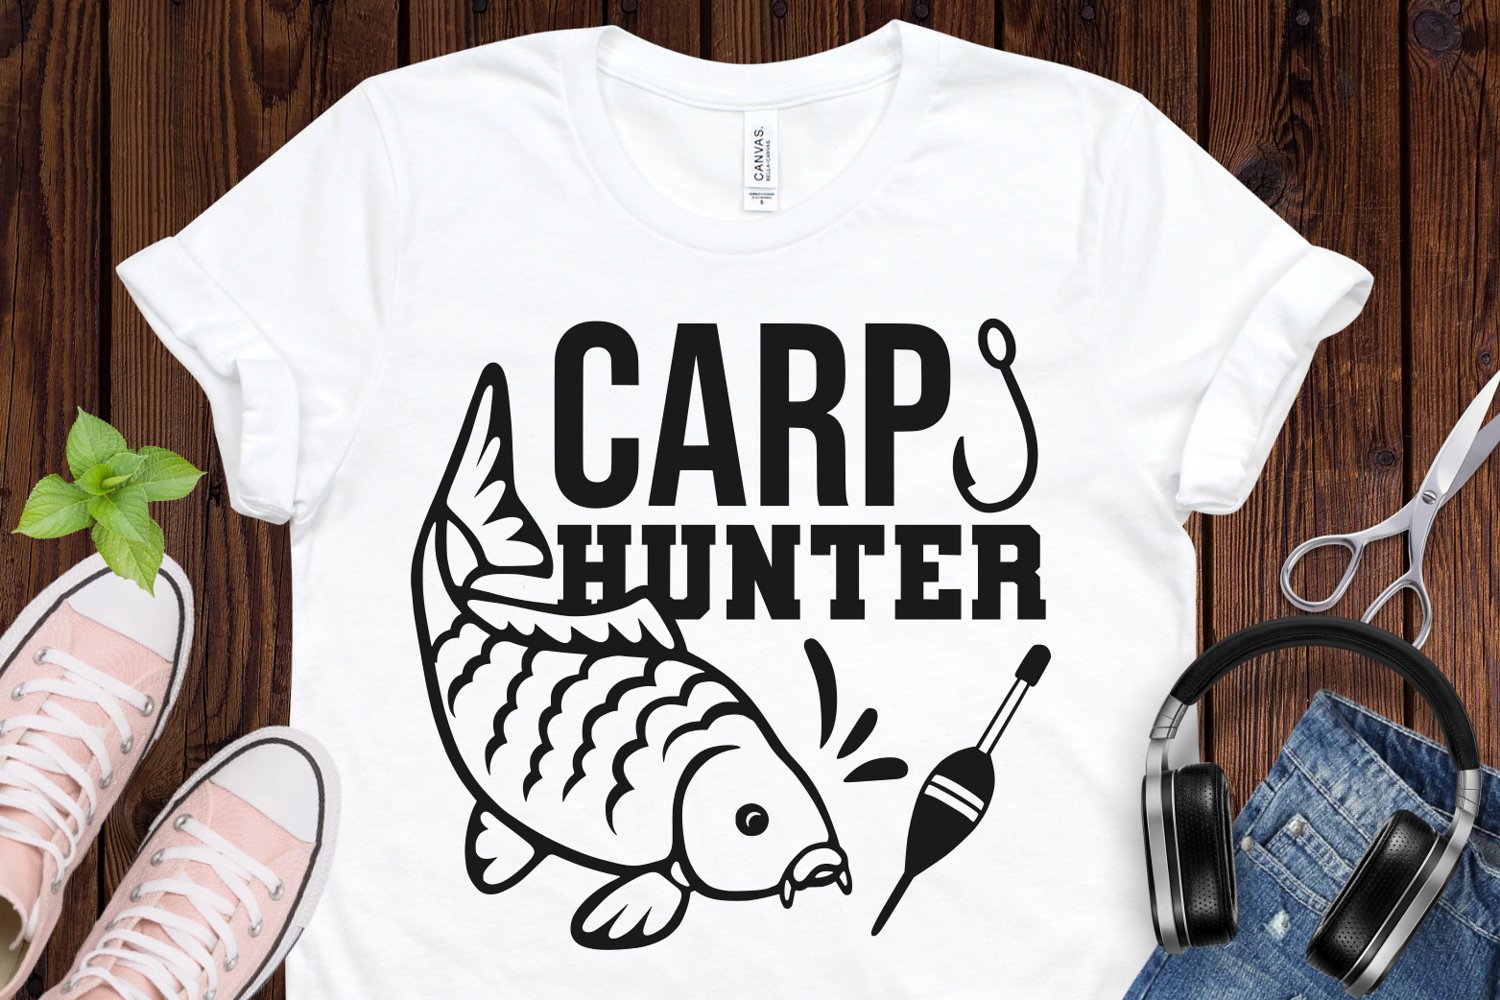 Be a real carp hunter.